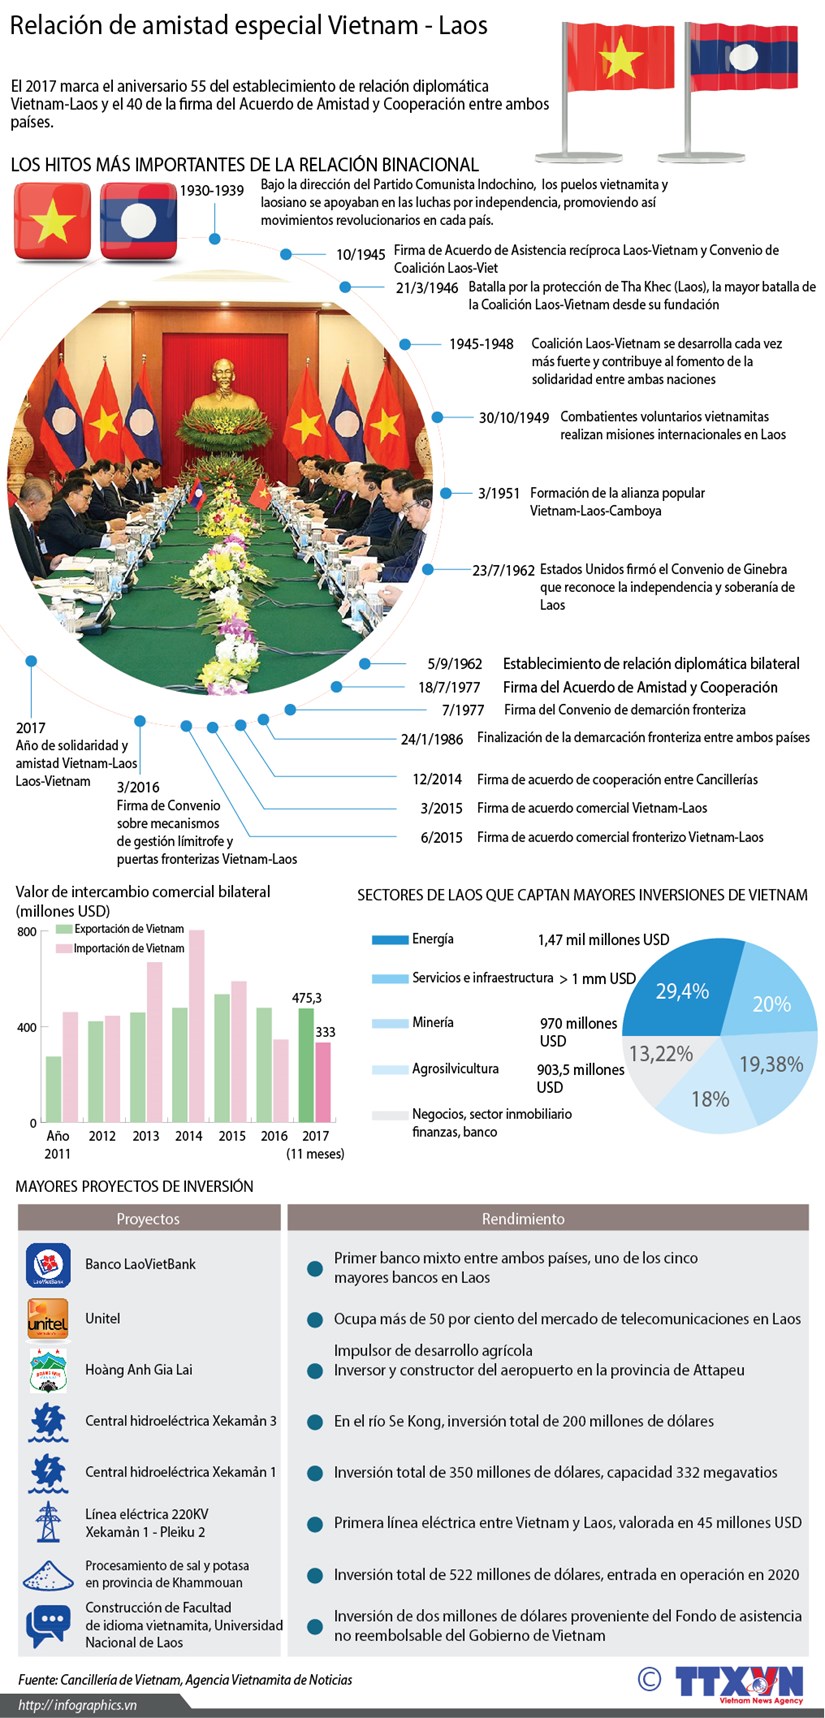 [Infografia] Relacion de amistad especial Vietnam - Laos hinh anh 1